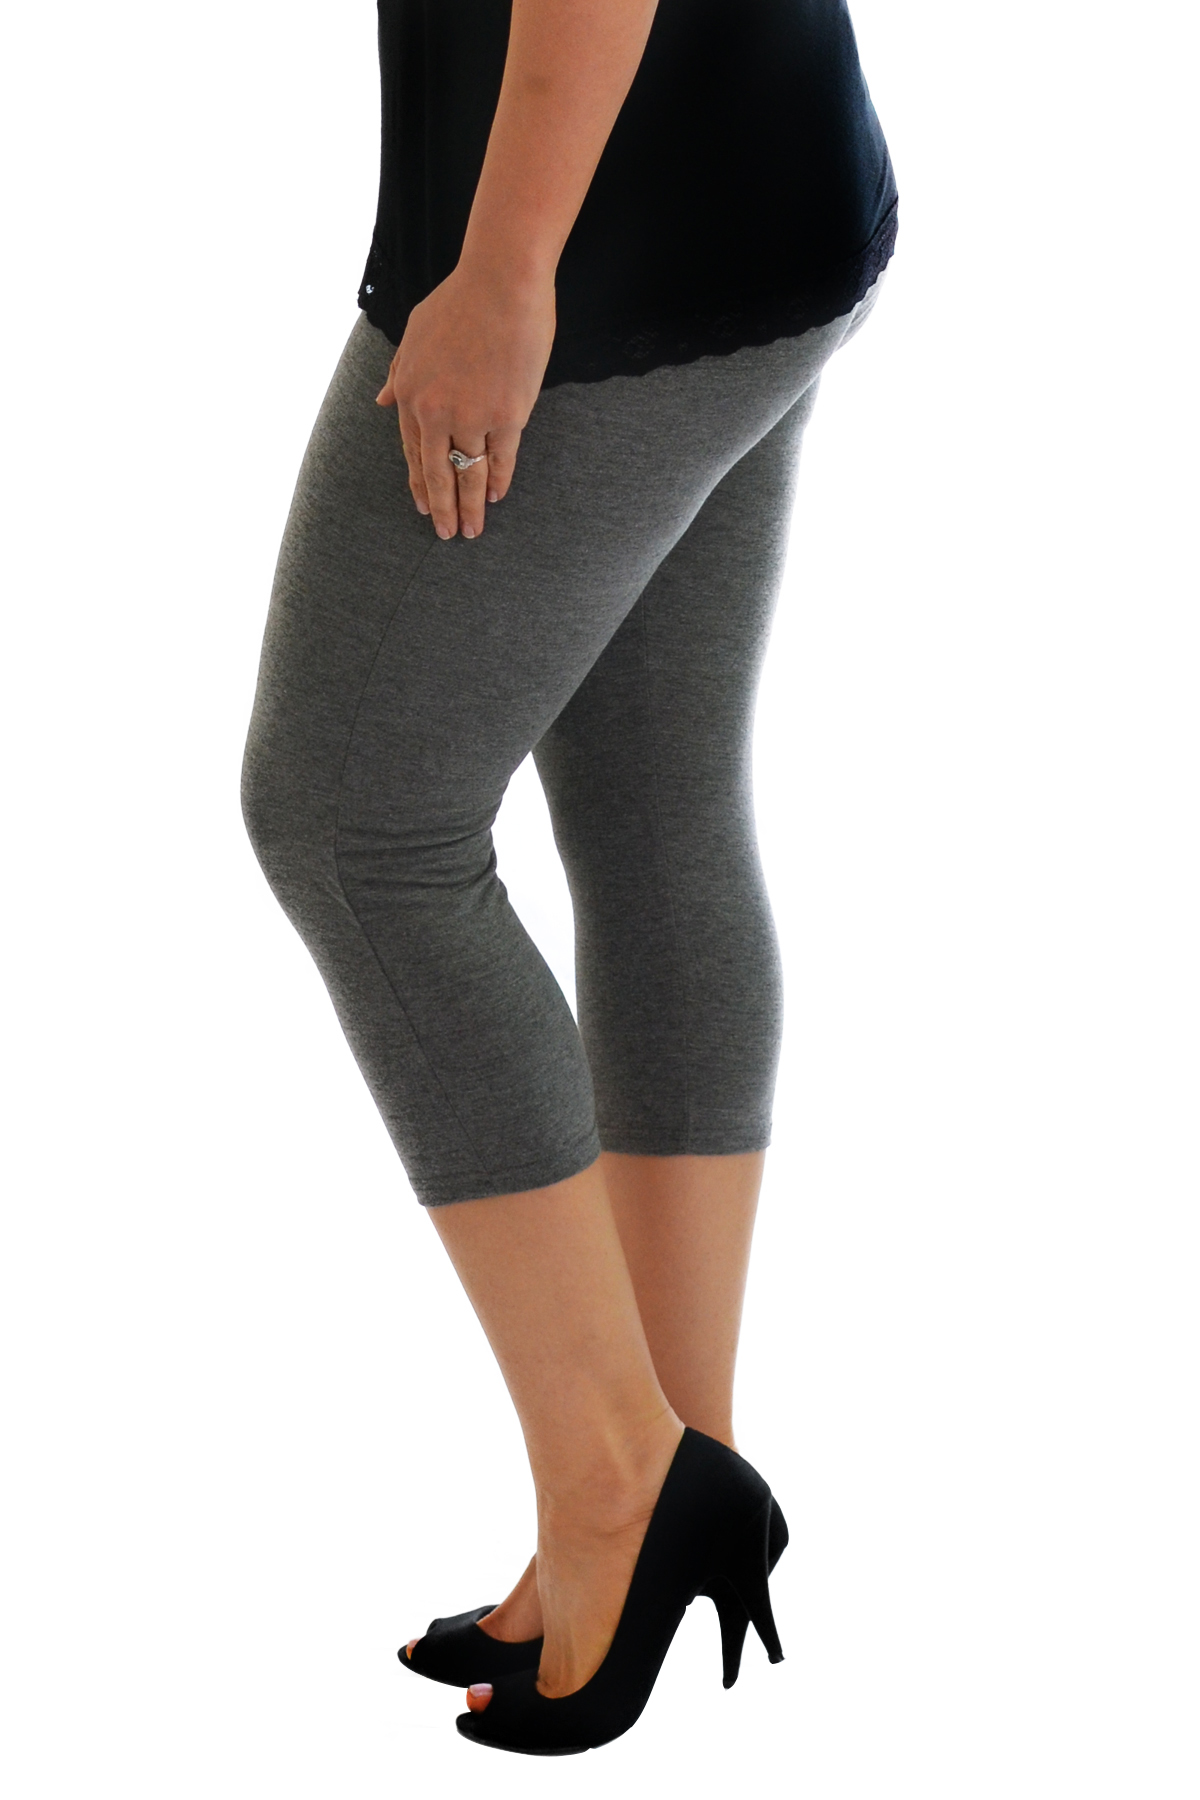 Women's Cotton Plus Size Leggings, Stretchy, X-Large - 7X